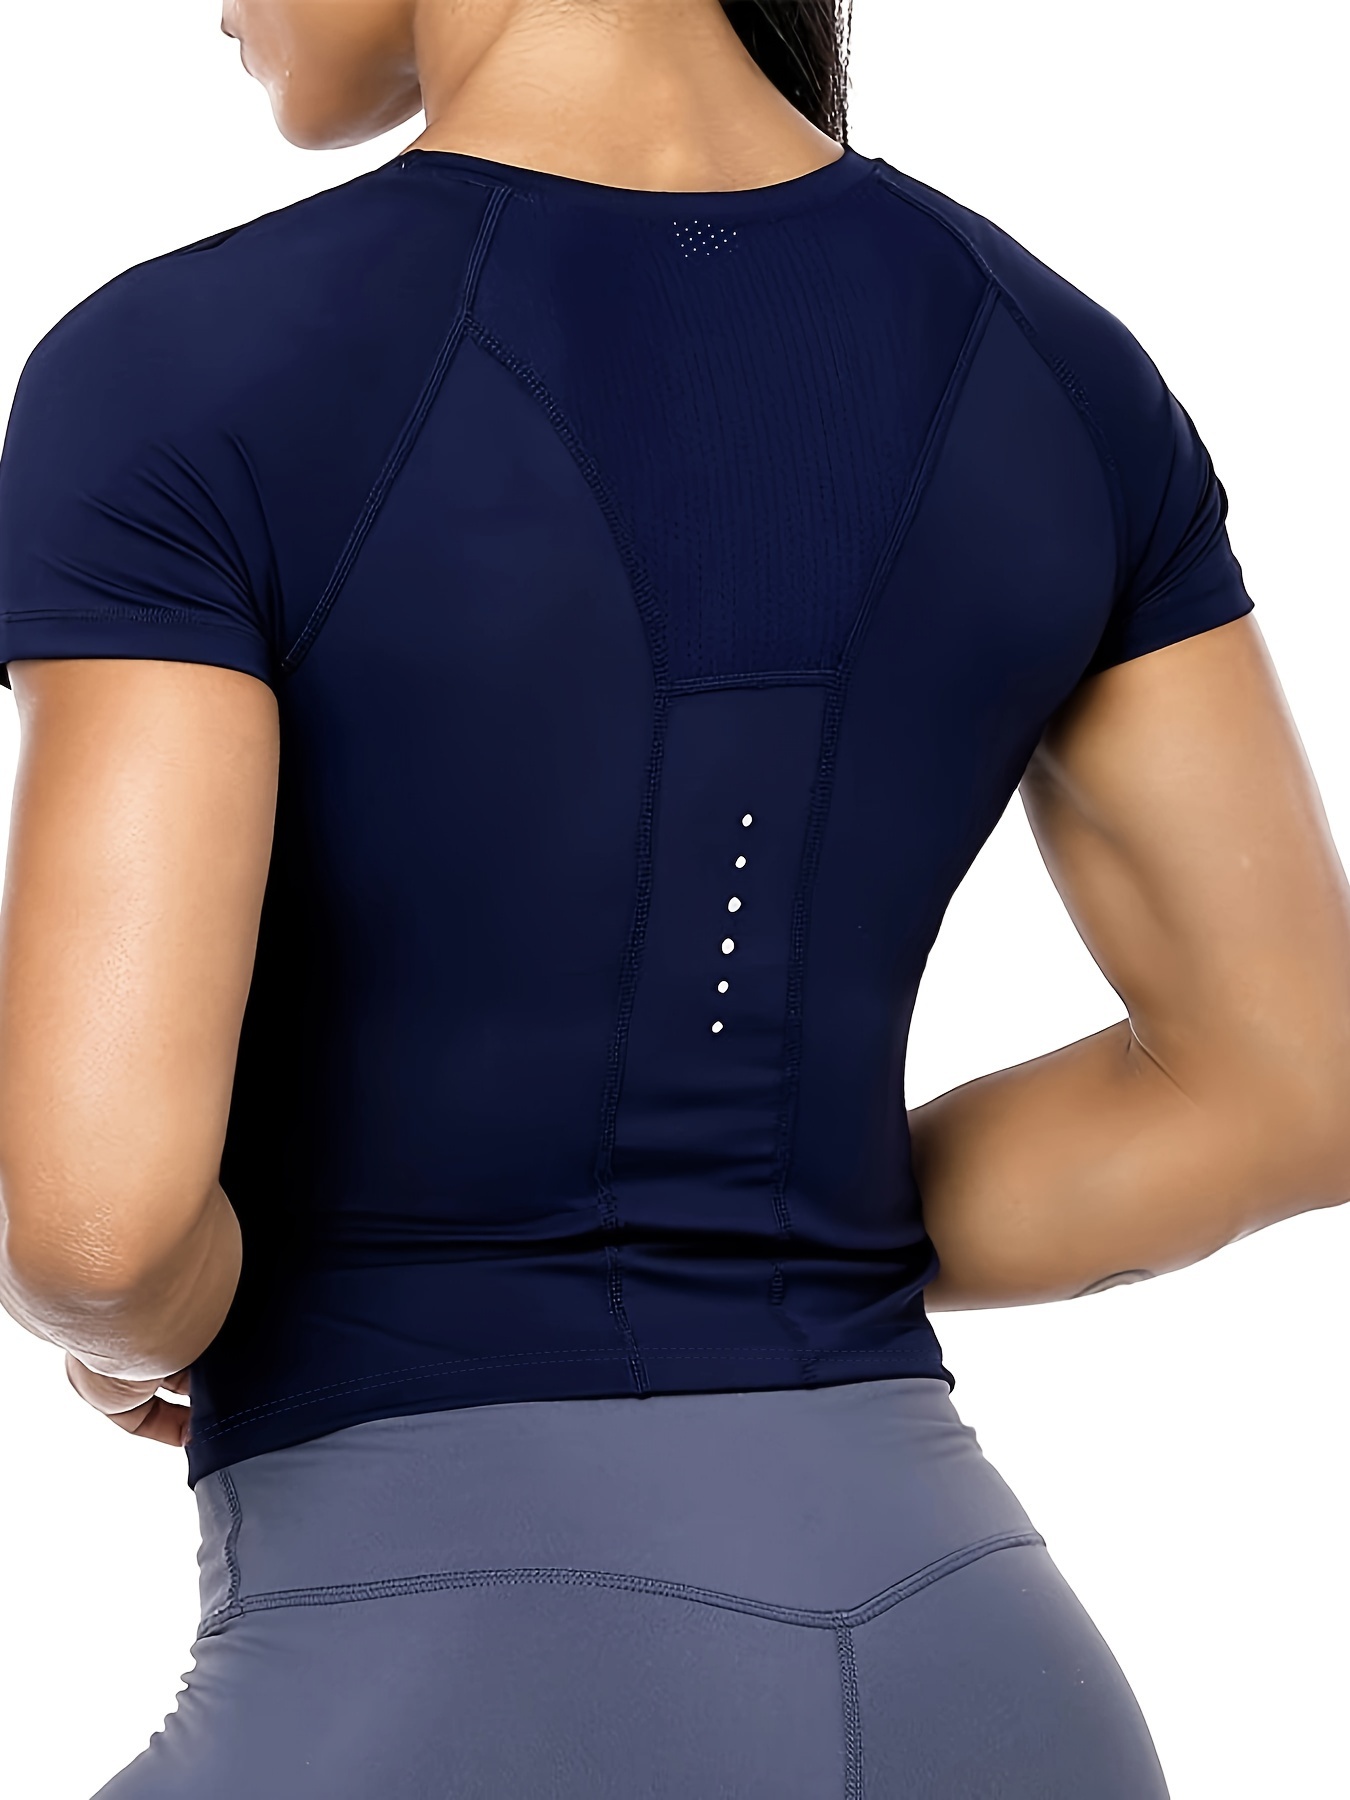 Amdohai Women Sports Shirt Stretchy Short Sleeve Tight Fitting Tops Athletic  Workout Running Yoga T-Shirt 